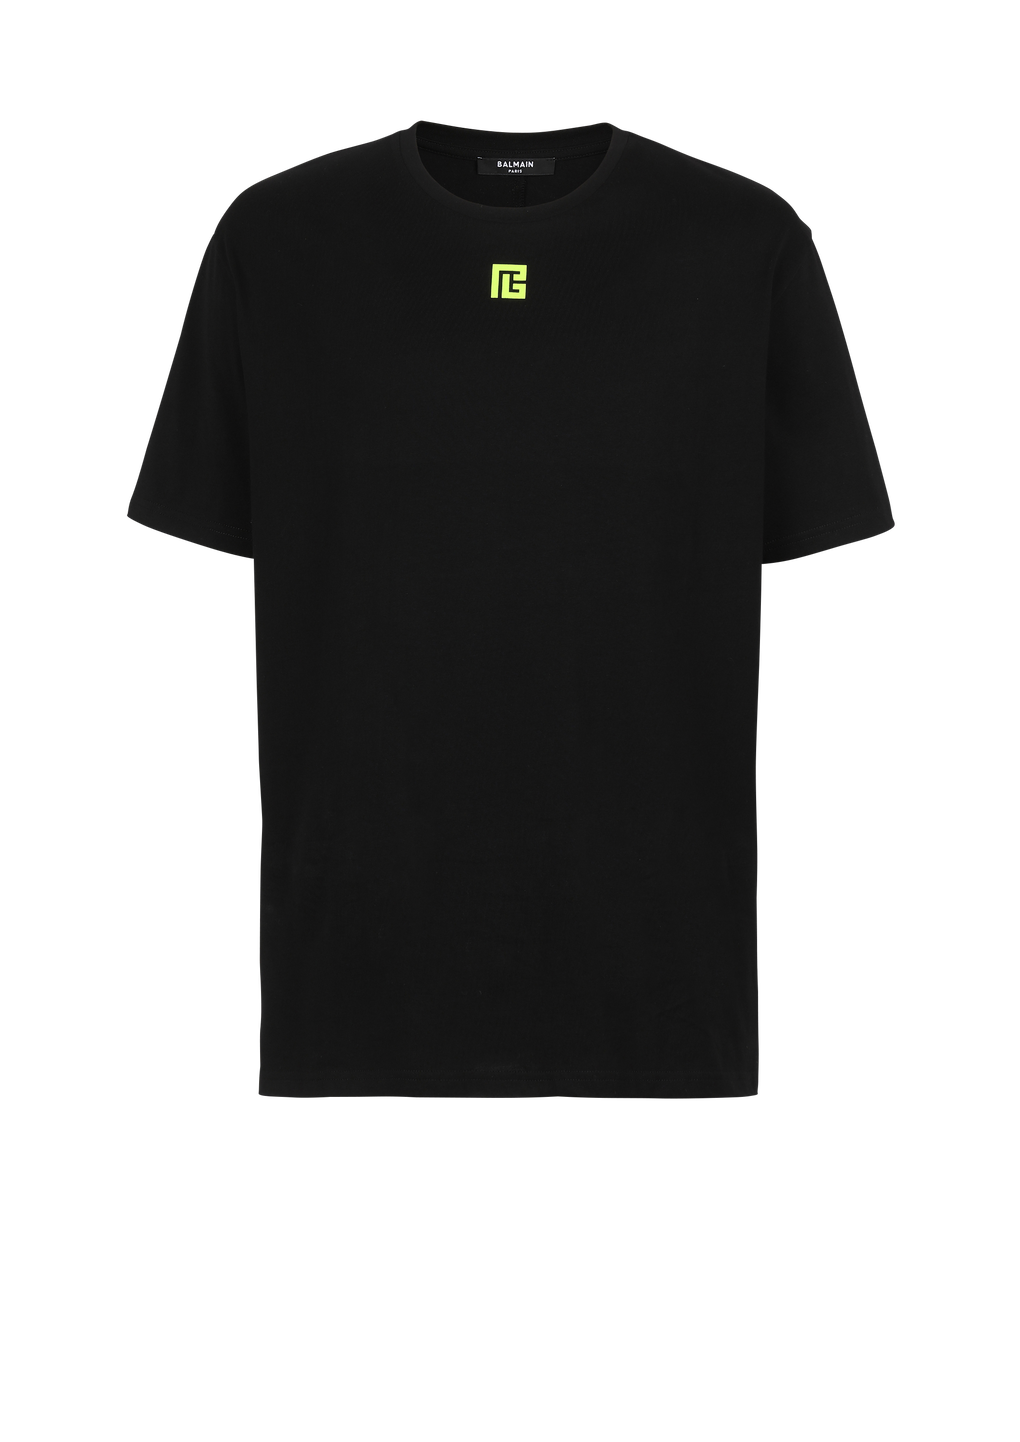 T-shirt in cotone con maxi logo Balmain sul retro, nero, hi-res